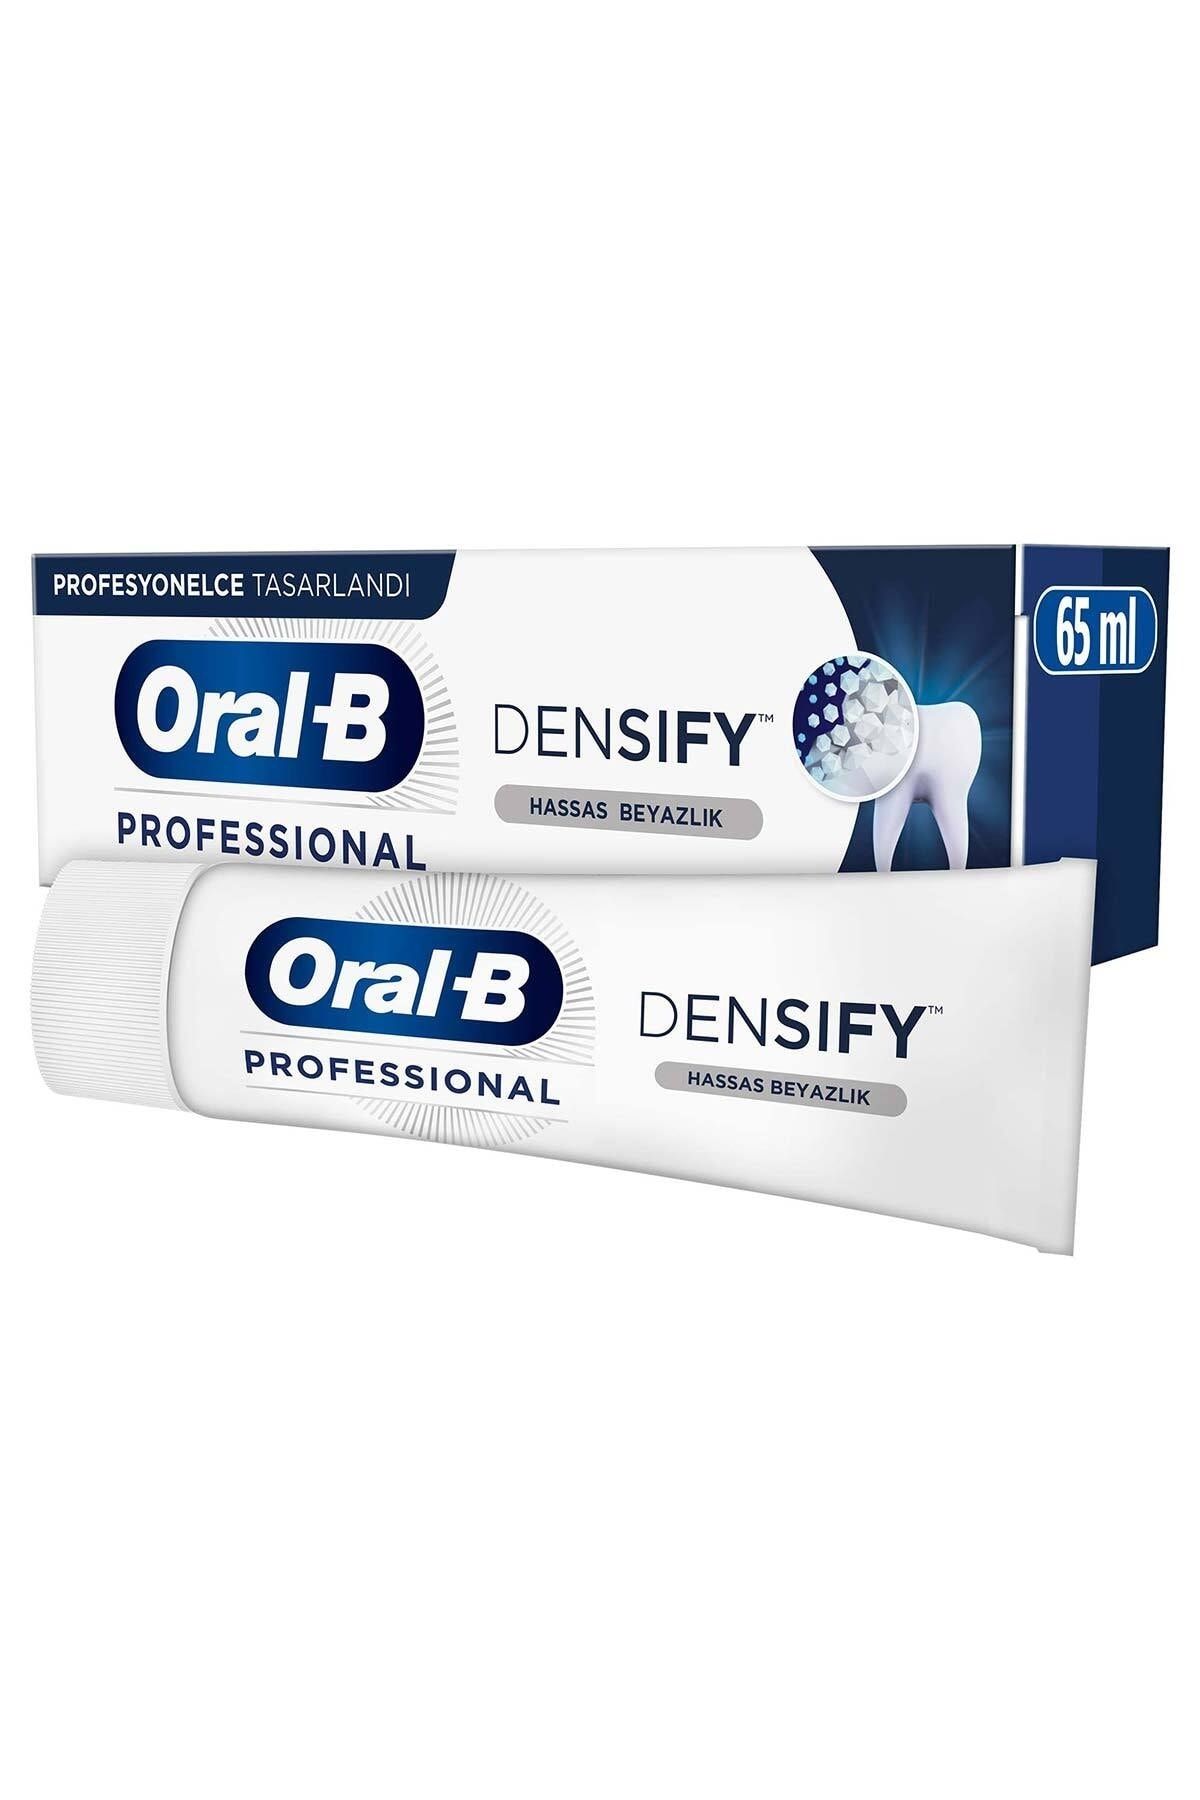 Professional Densify Hassas Beyazlık Diş Macunu 65ml_0